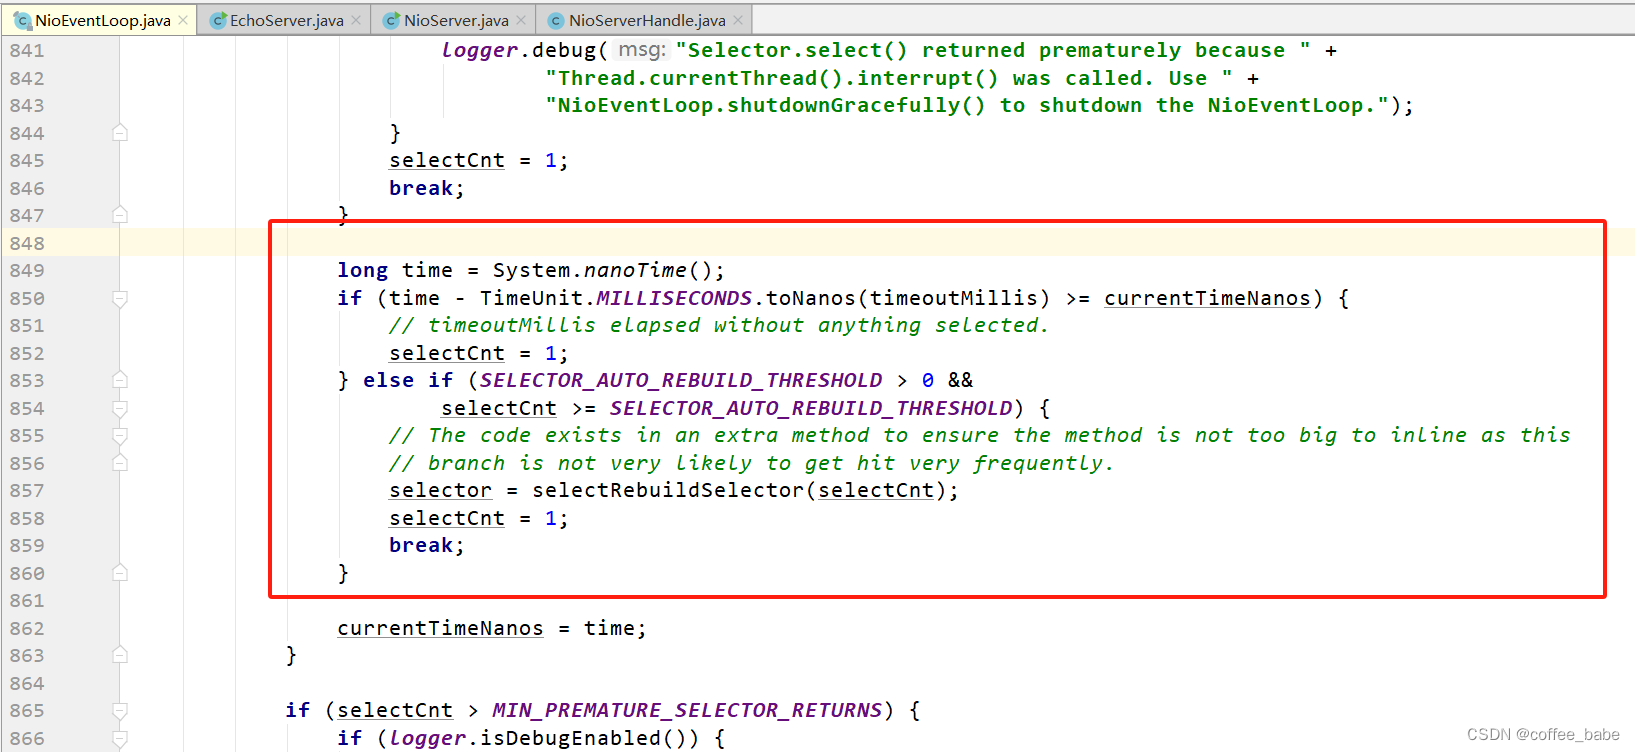 Netty是如何解决JDK中的Selector的bug的？